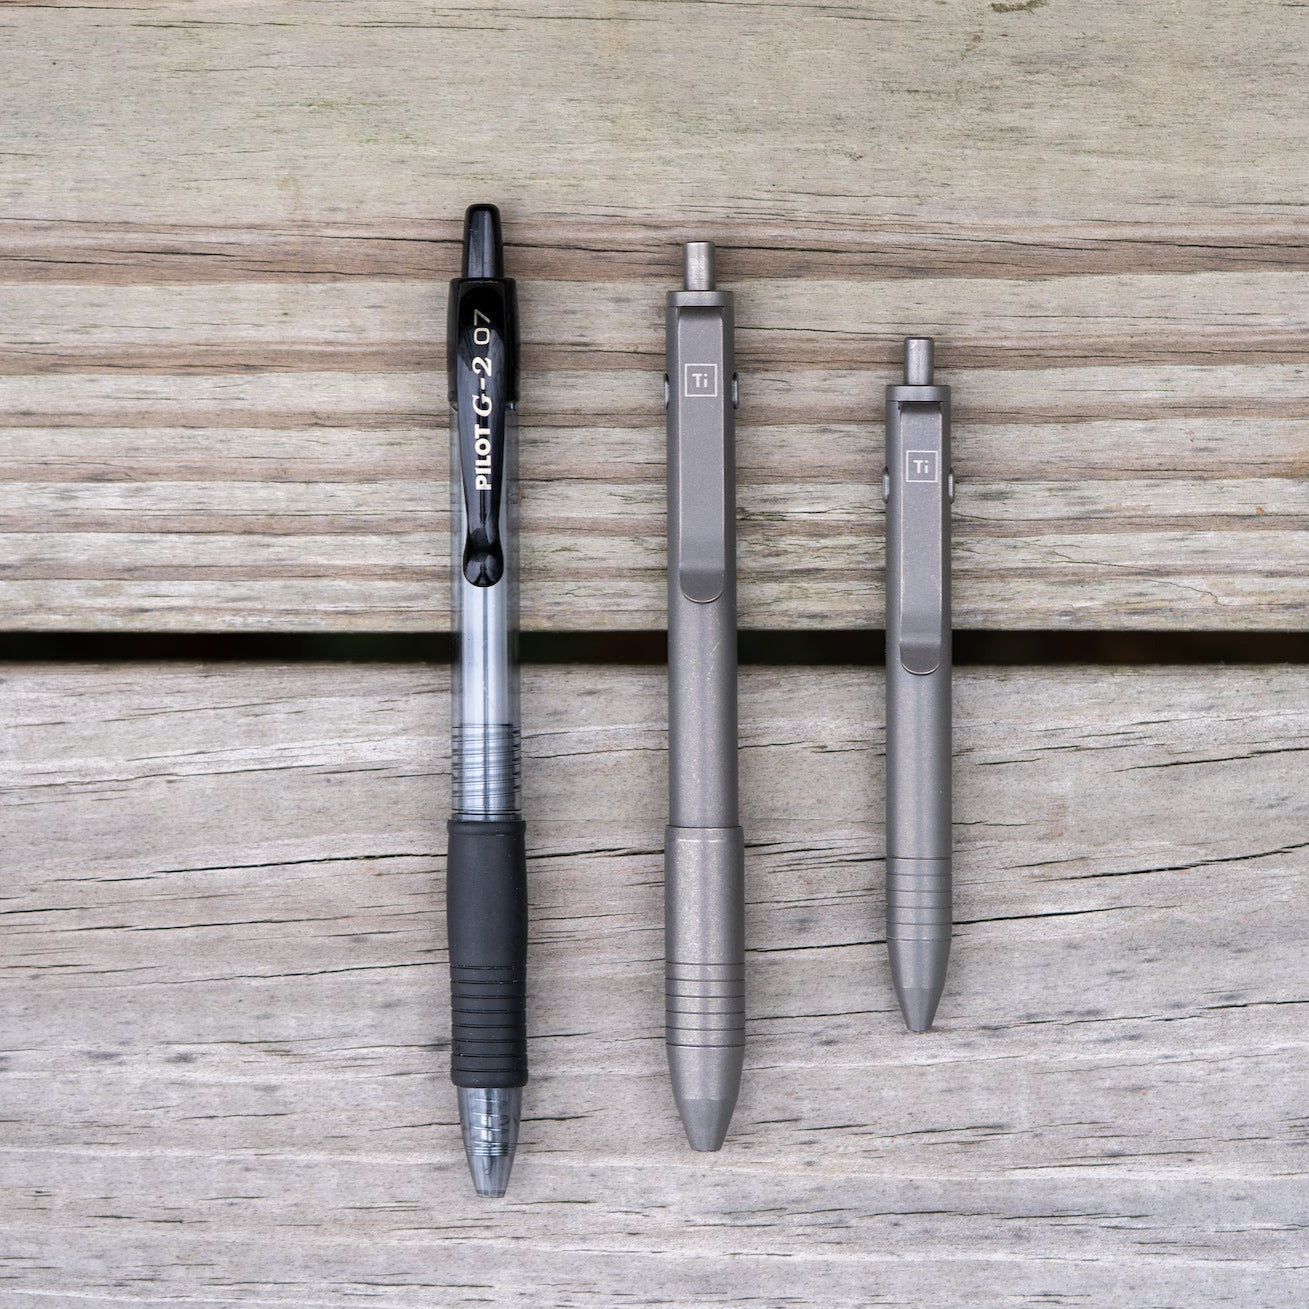 Big Idea Design  Complete Pen Collection 